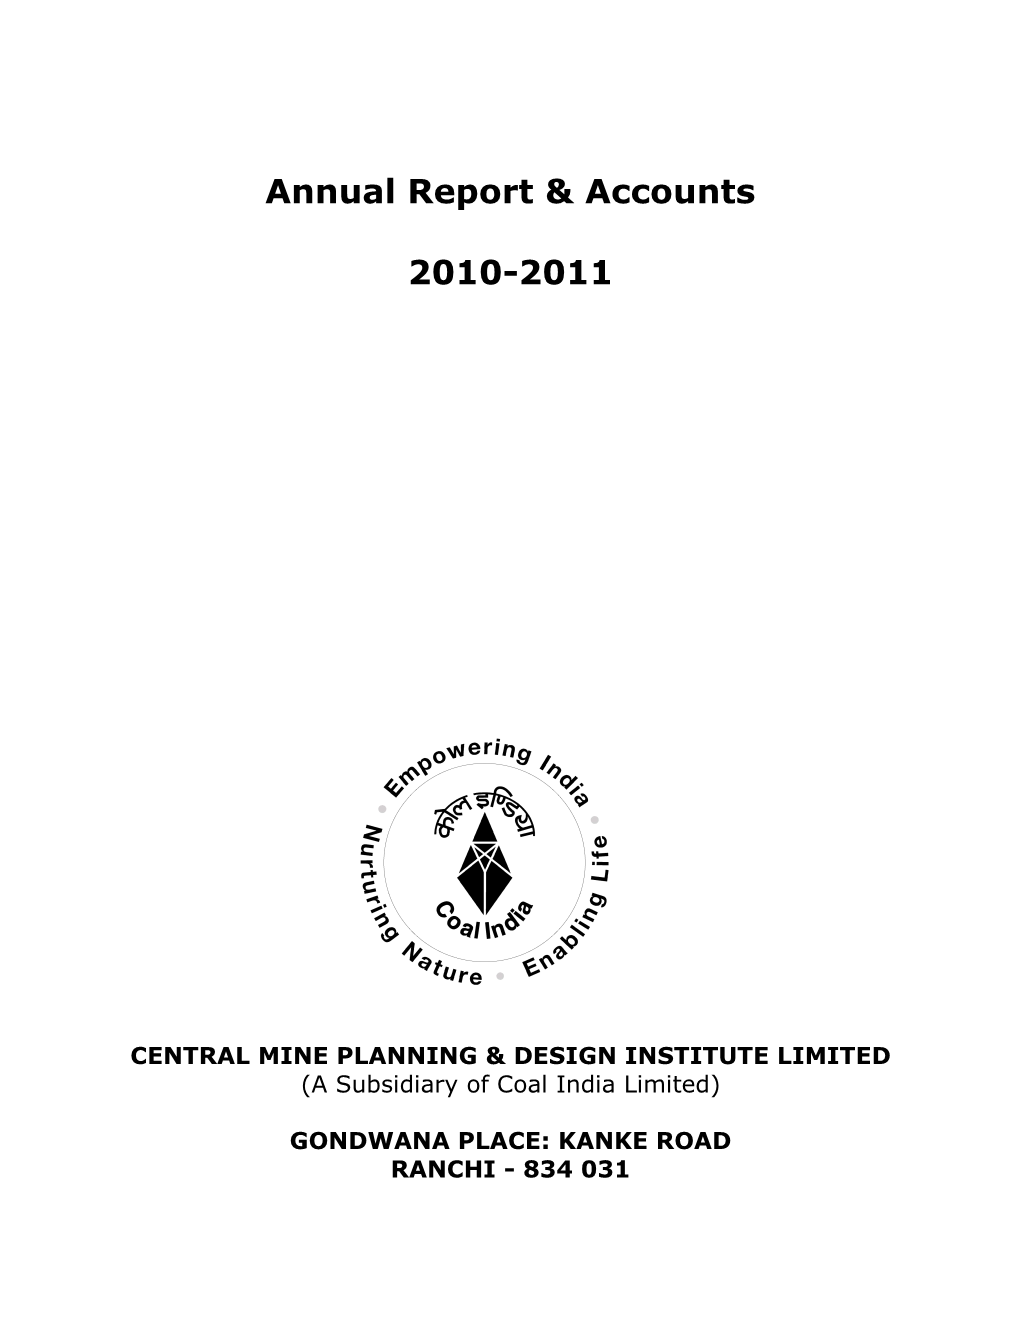 Annual Report & Accounts 2010-2011